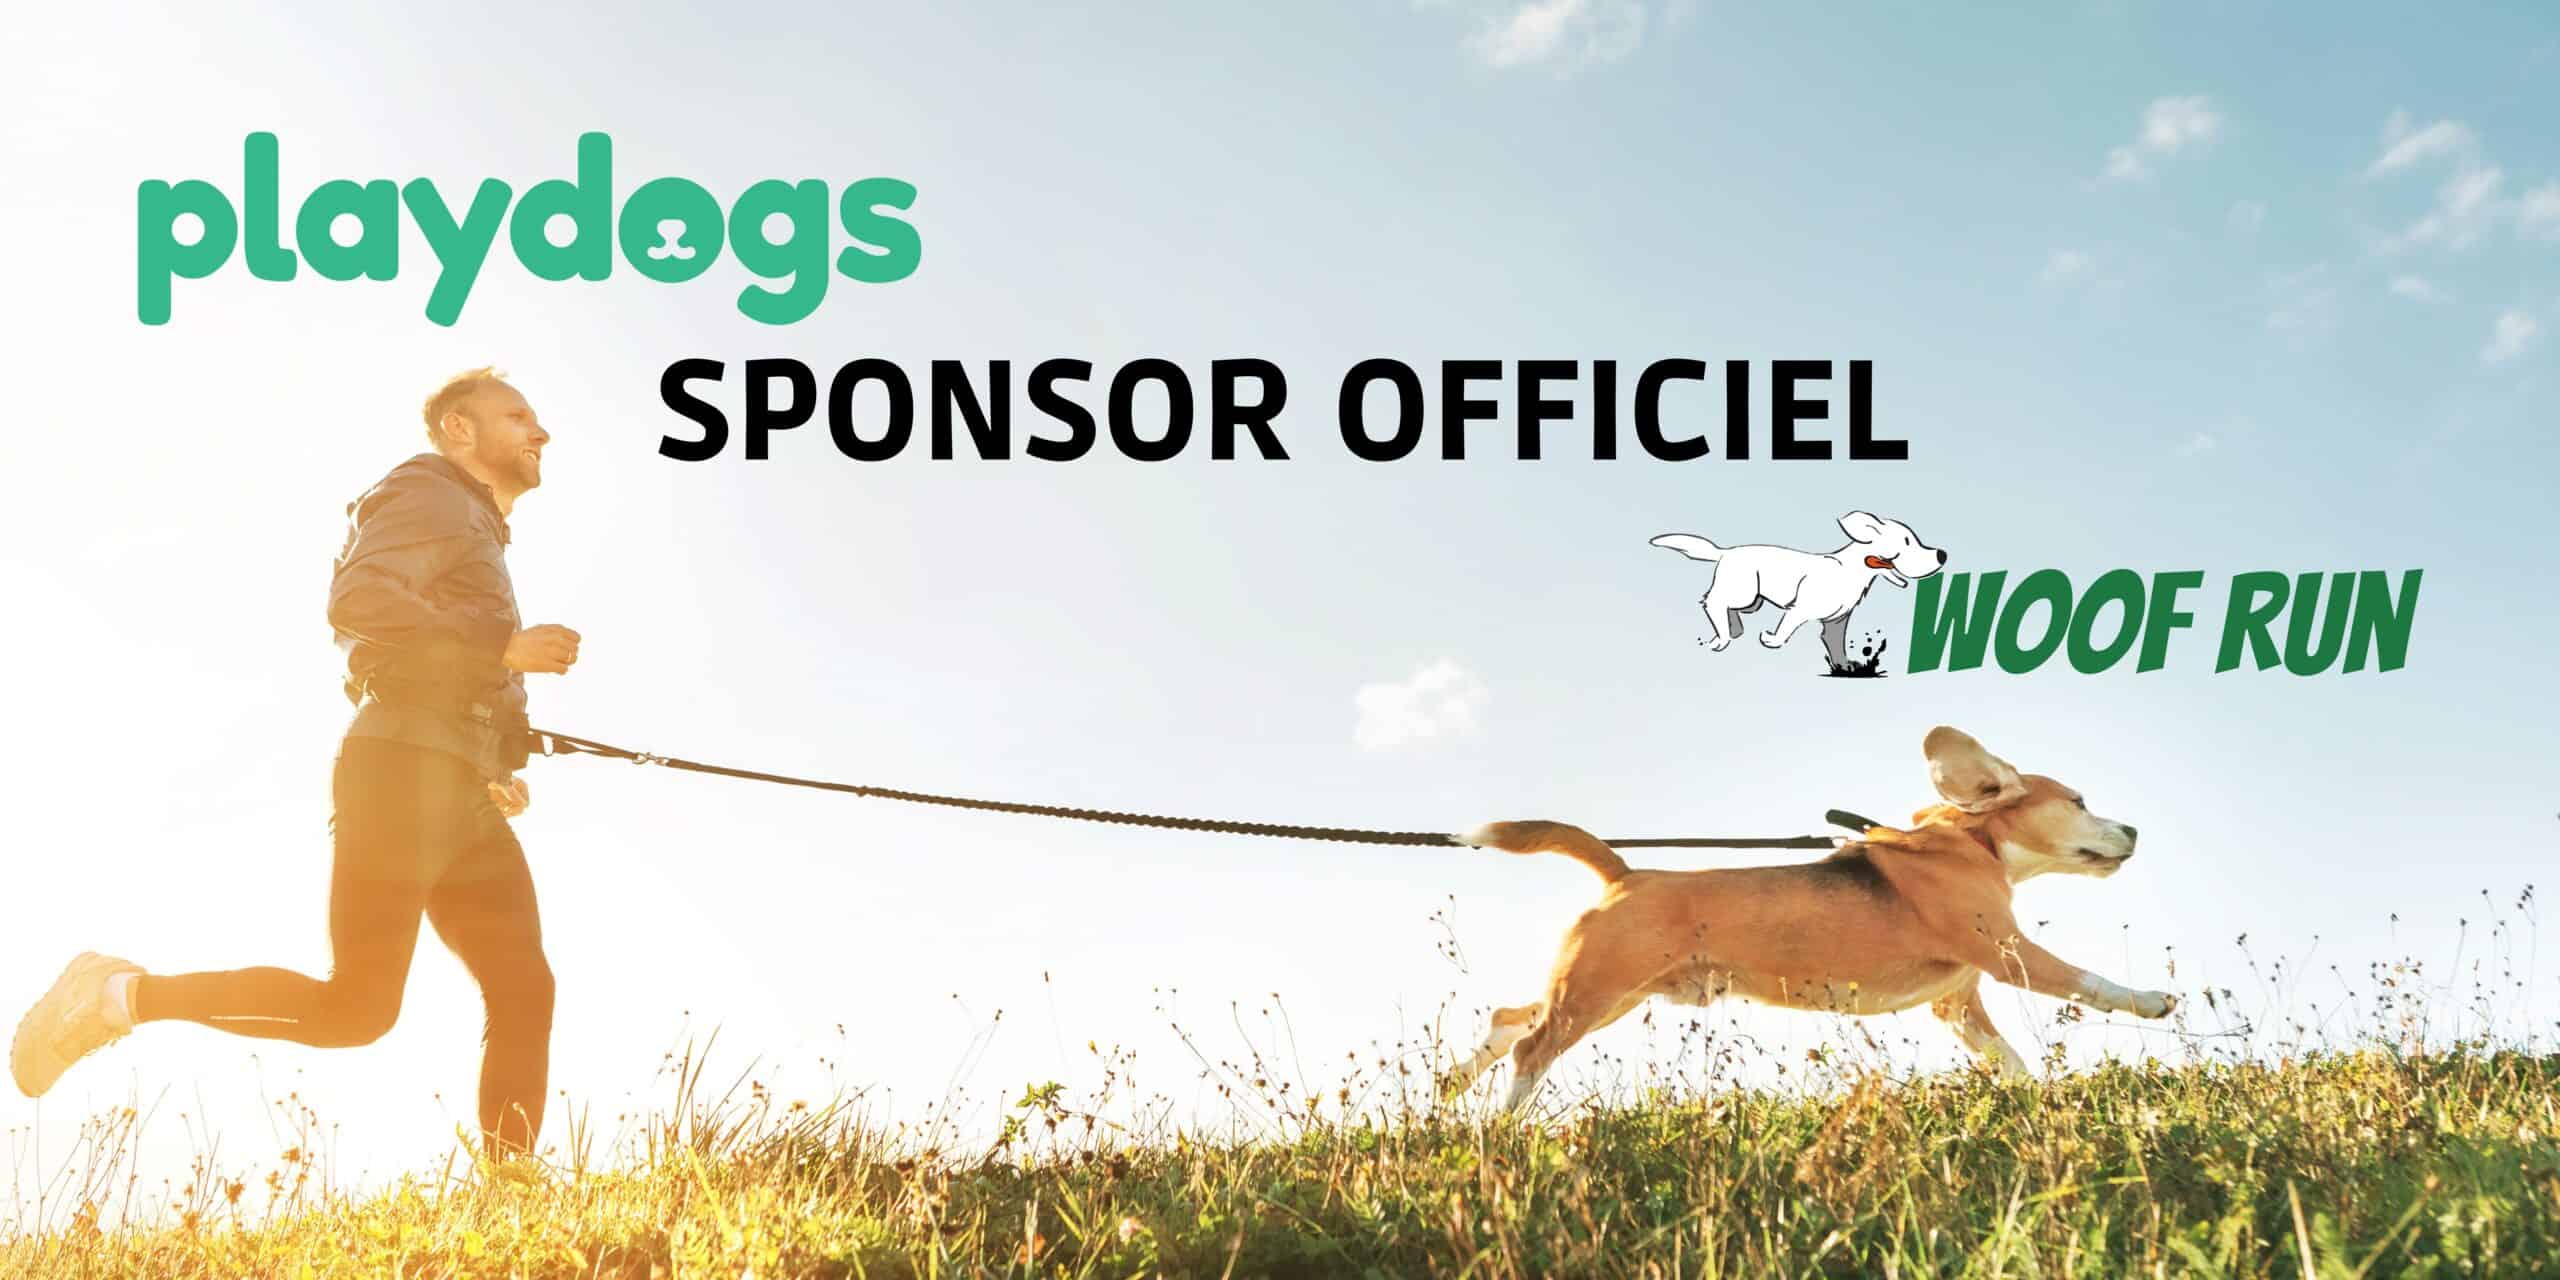 Play-Dogs Sponsor Woof Run 2022